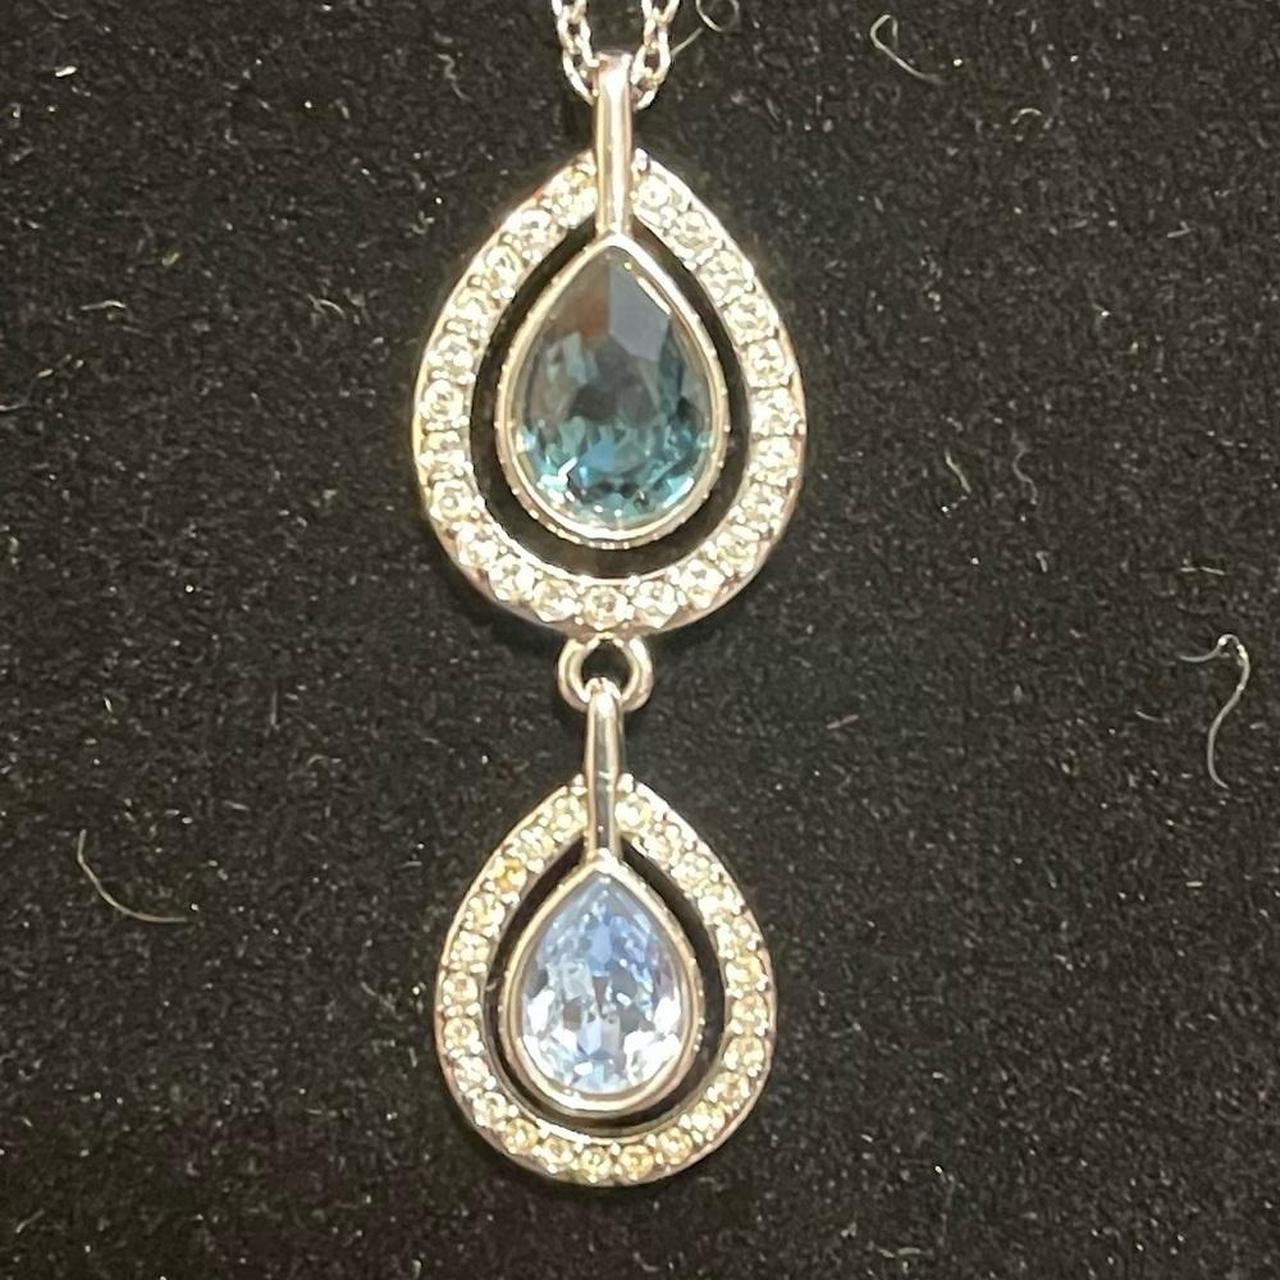 Product Image 1 - Stunning Swarovski Crystal Necklace. 2